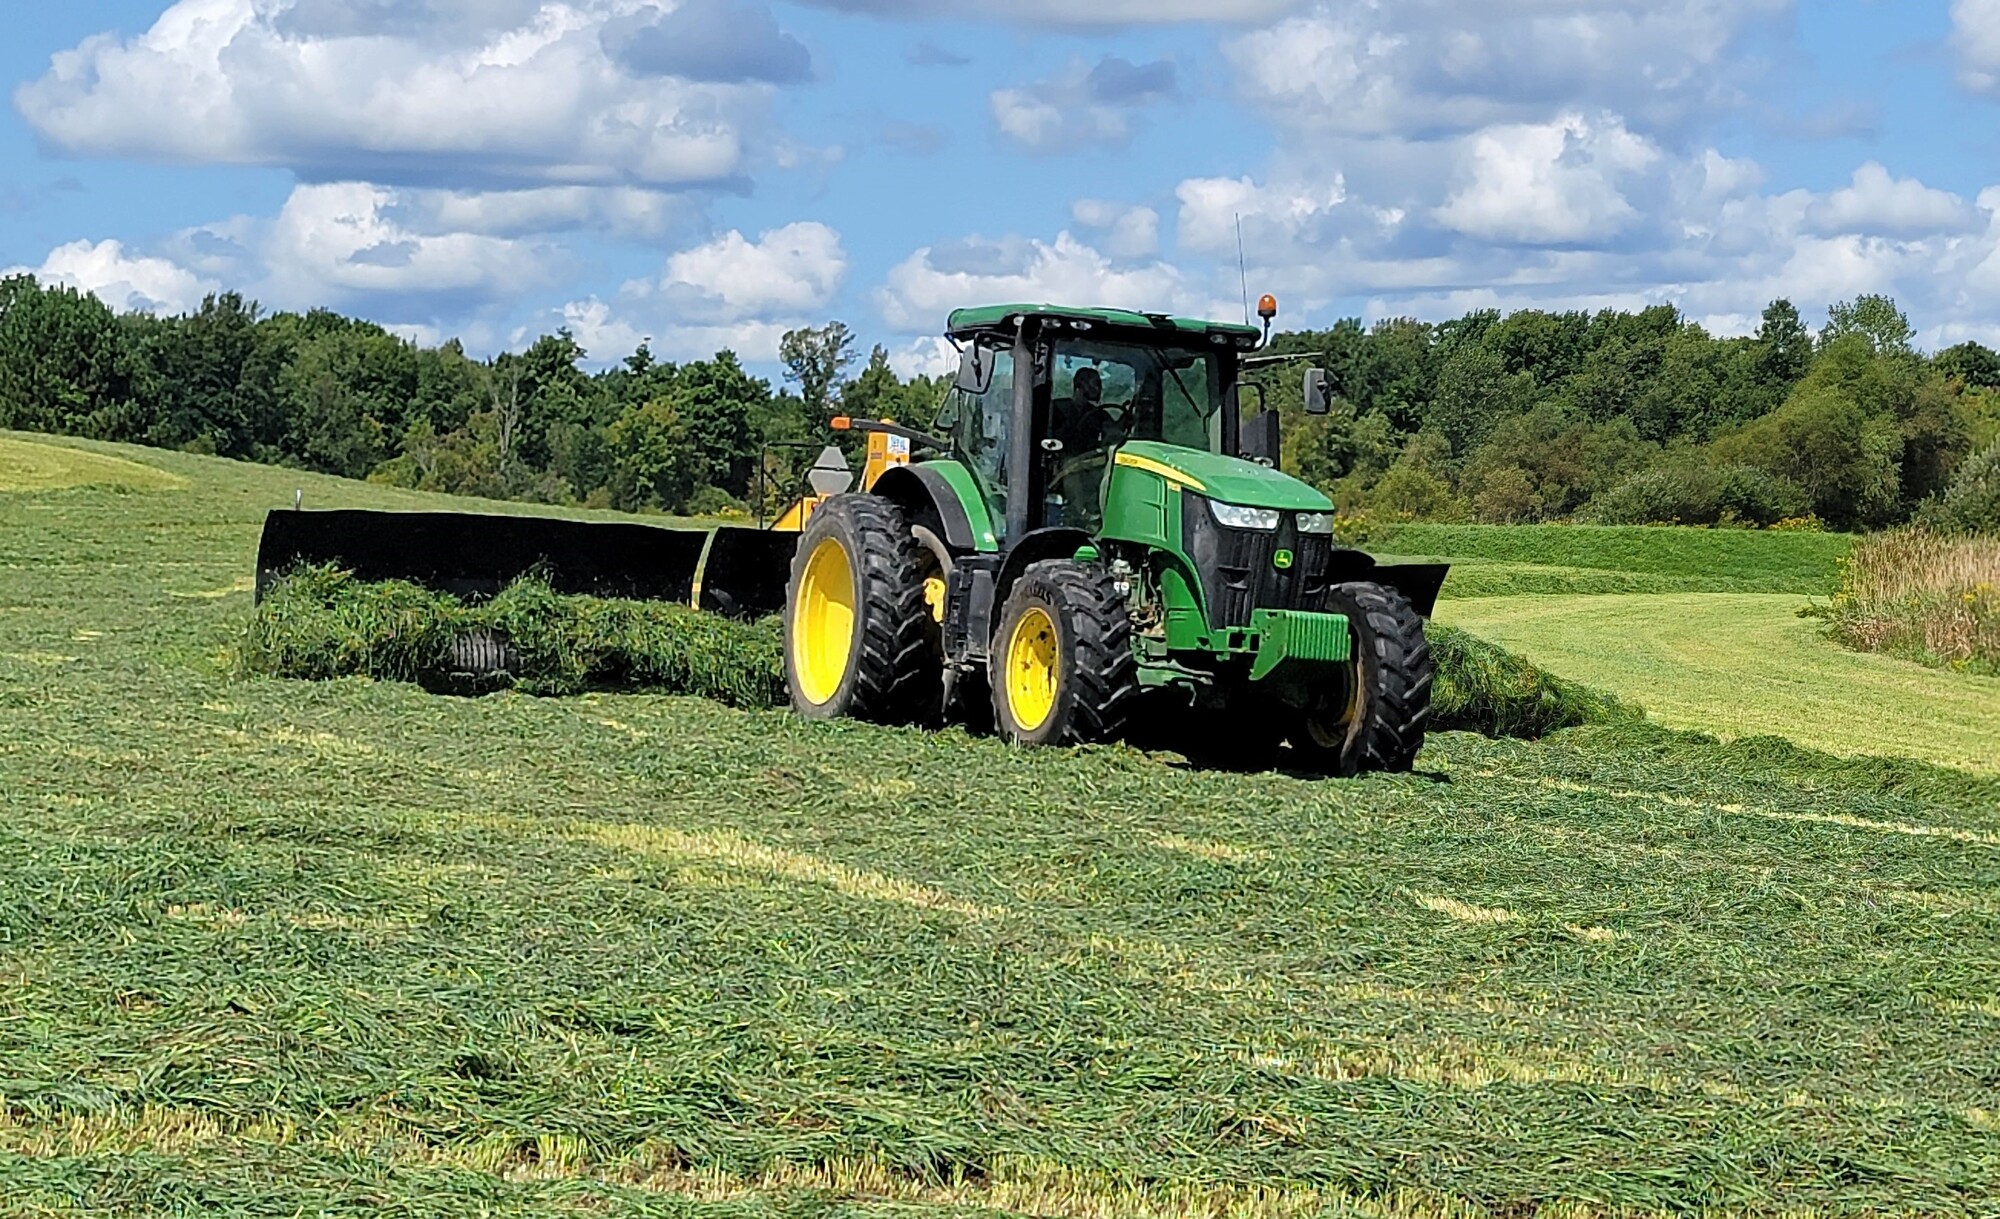 2011 OXBO 334 Harvesting Equipment | Iron Listing